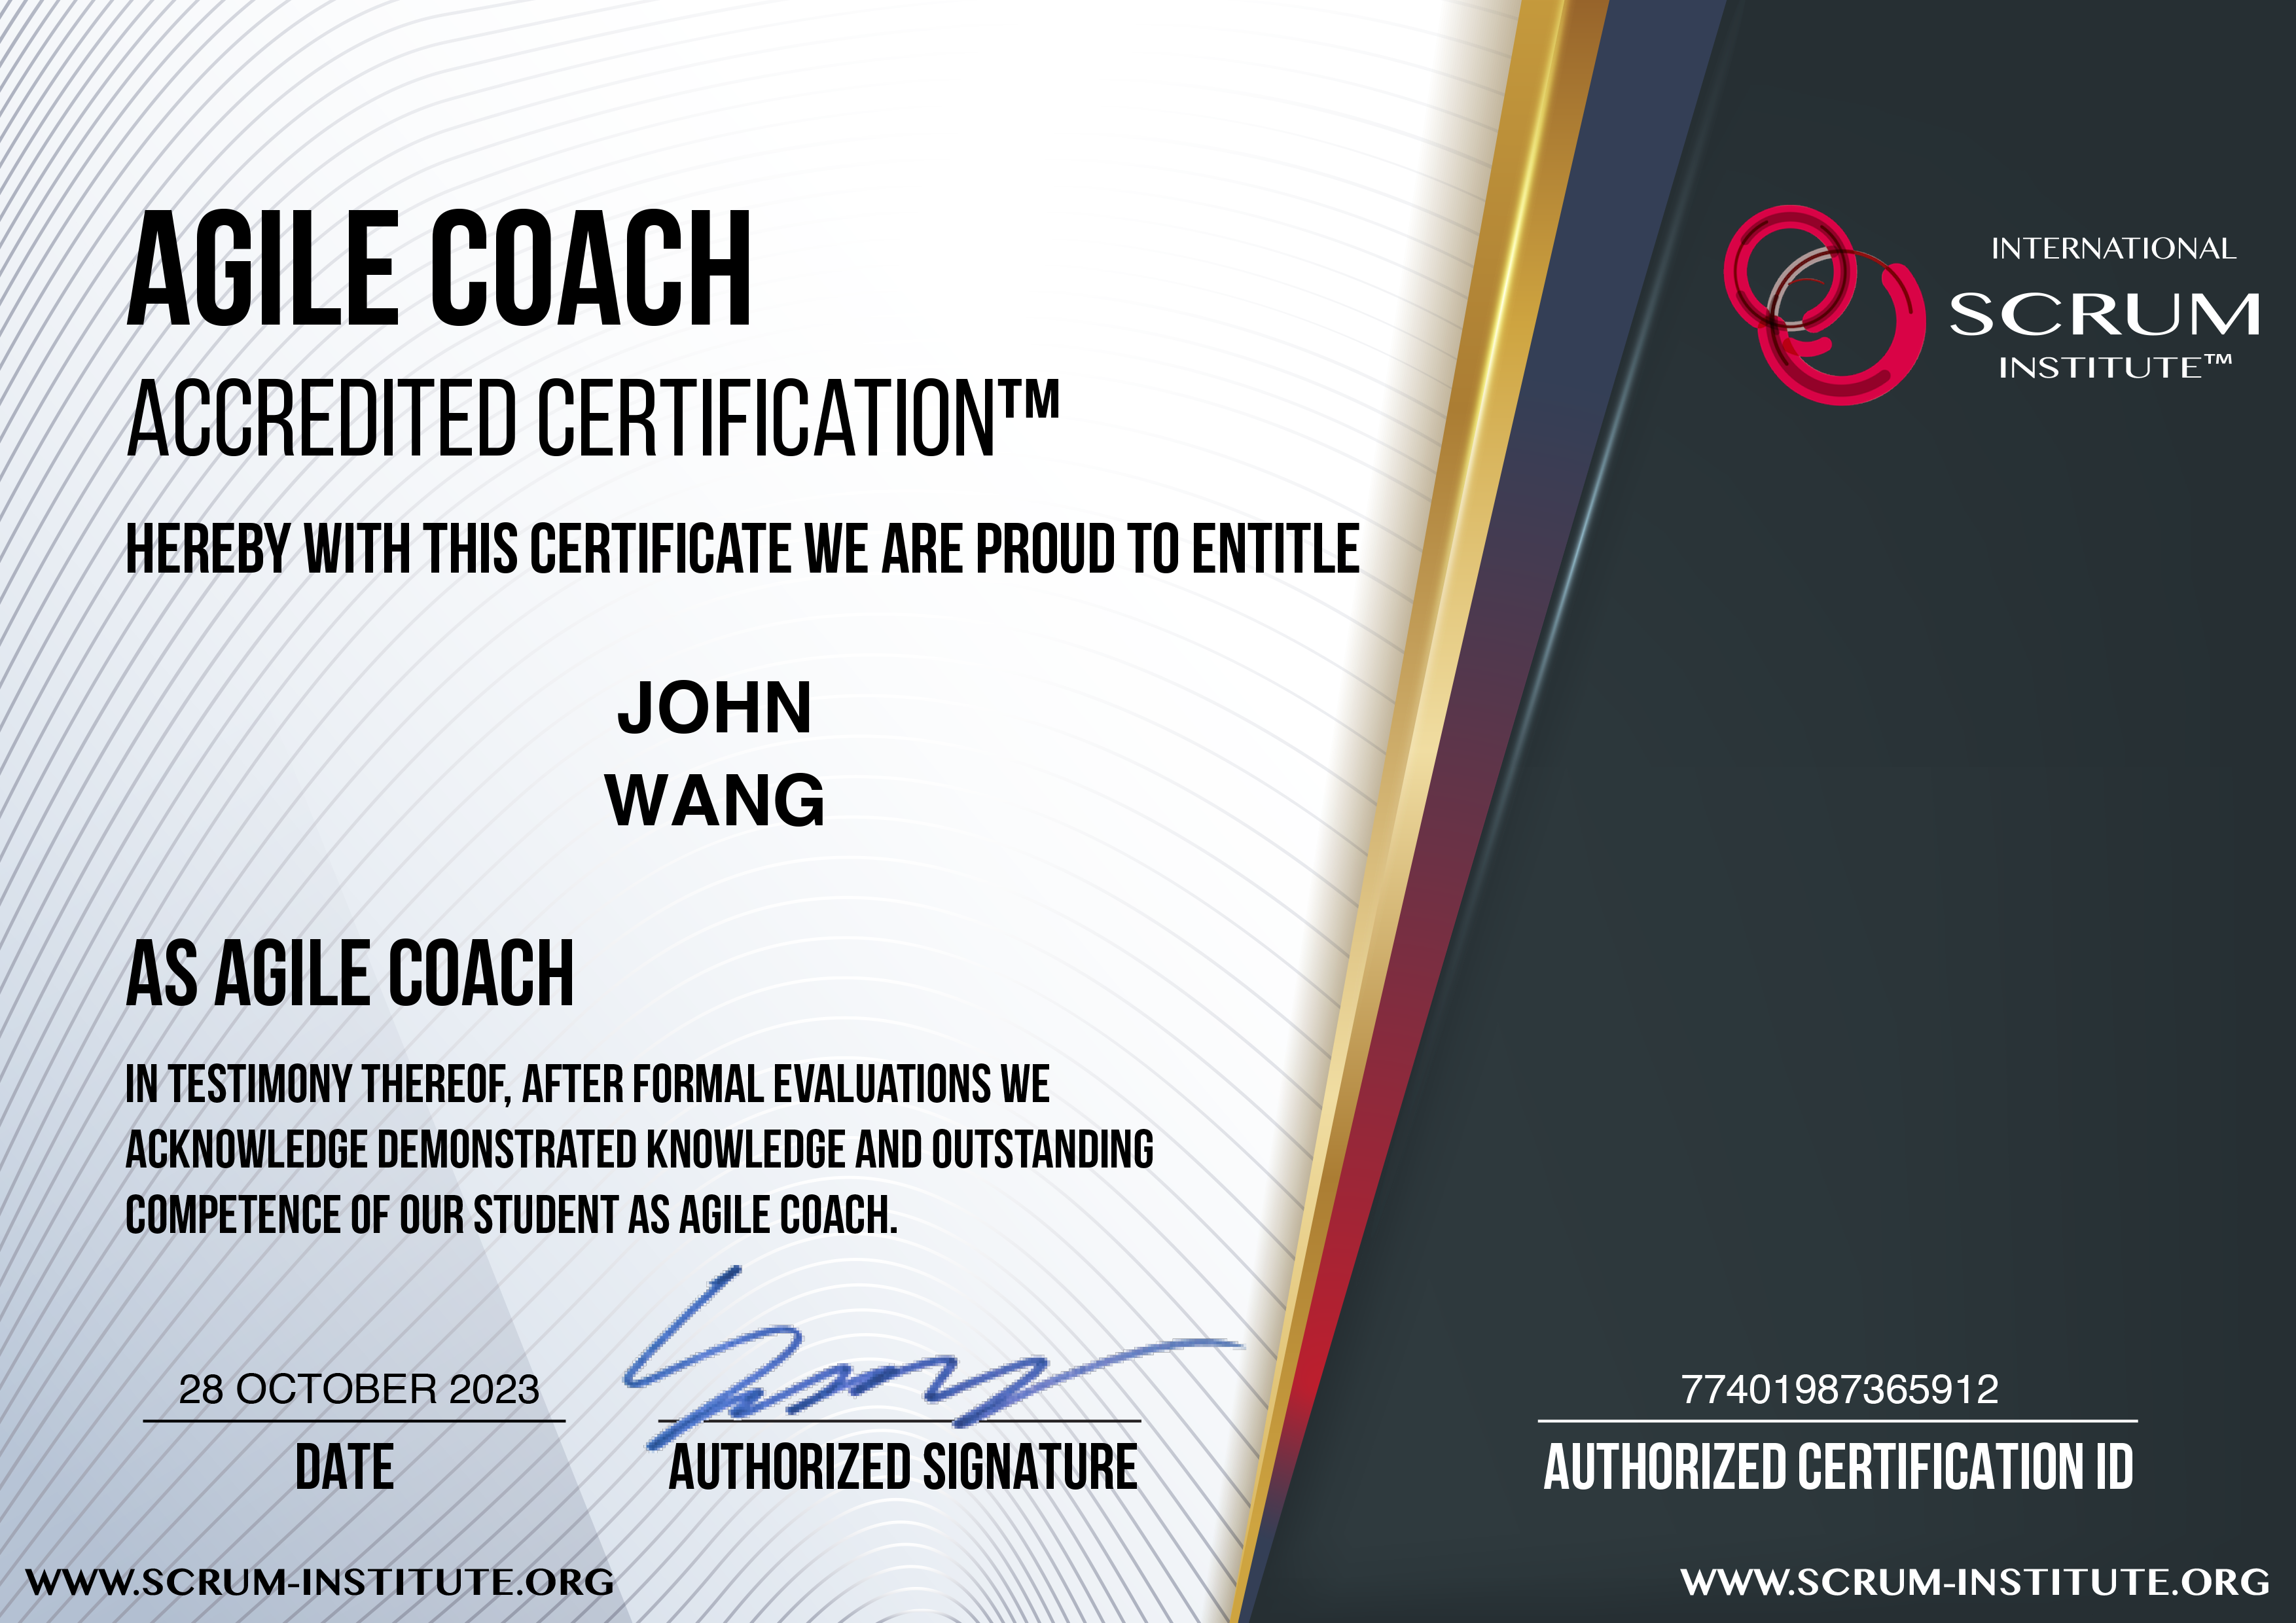 John's Agile Coach Accredited Certification (ACAC) from Scrum Institute